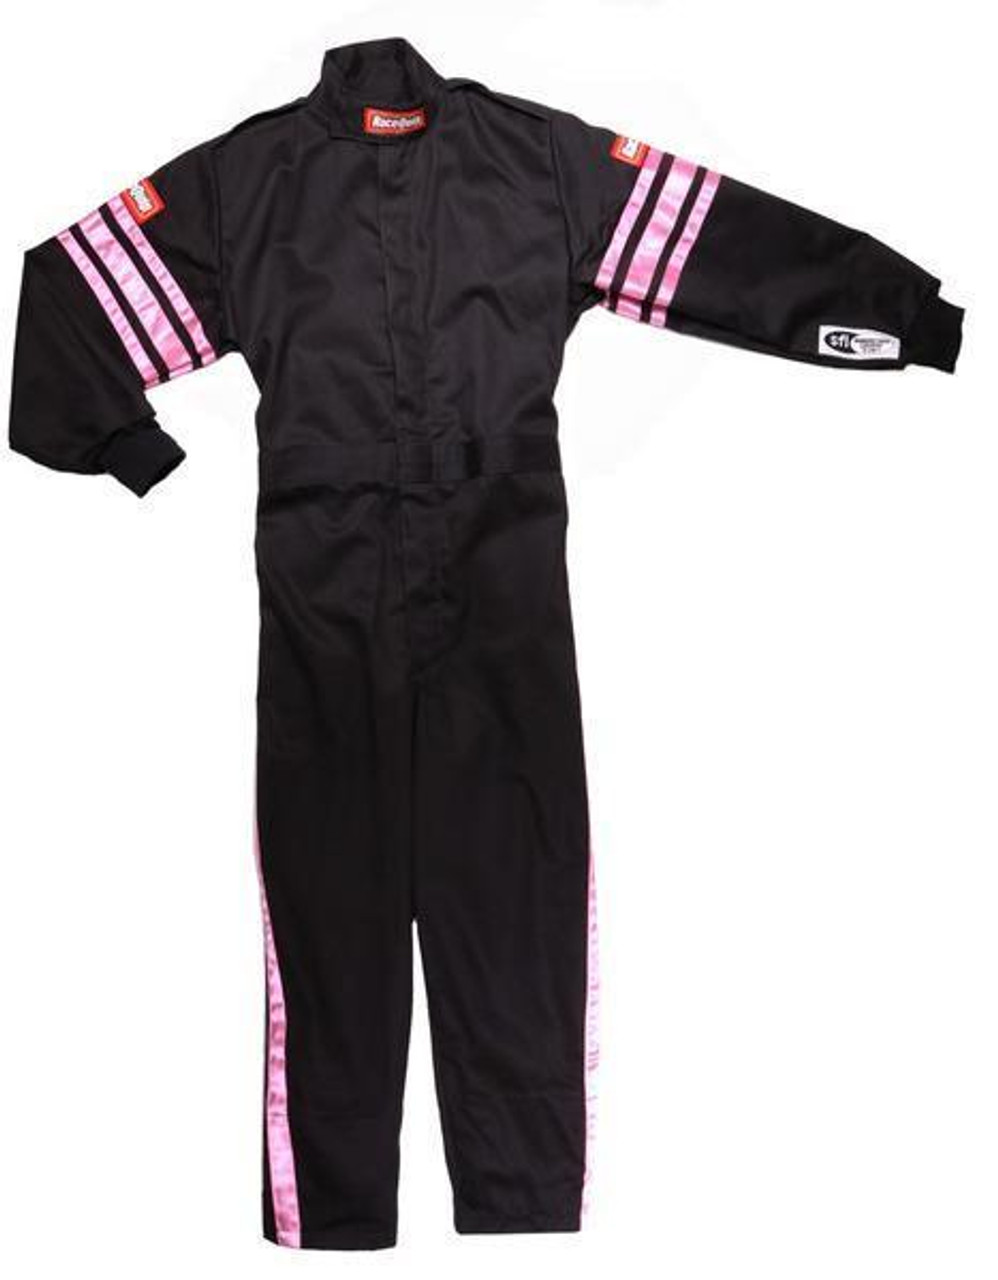 Black Suit Single Layer Kids Small Pink Trim RQP1950892